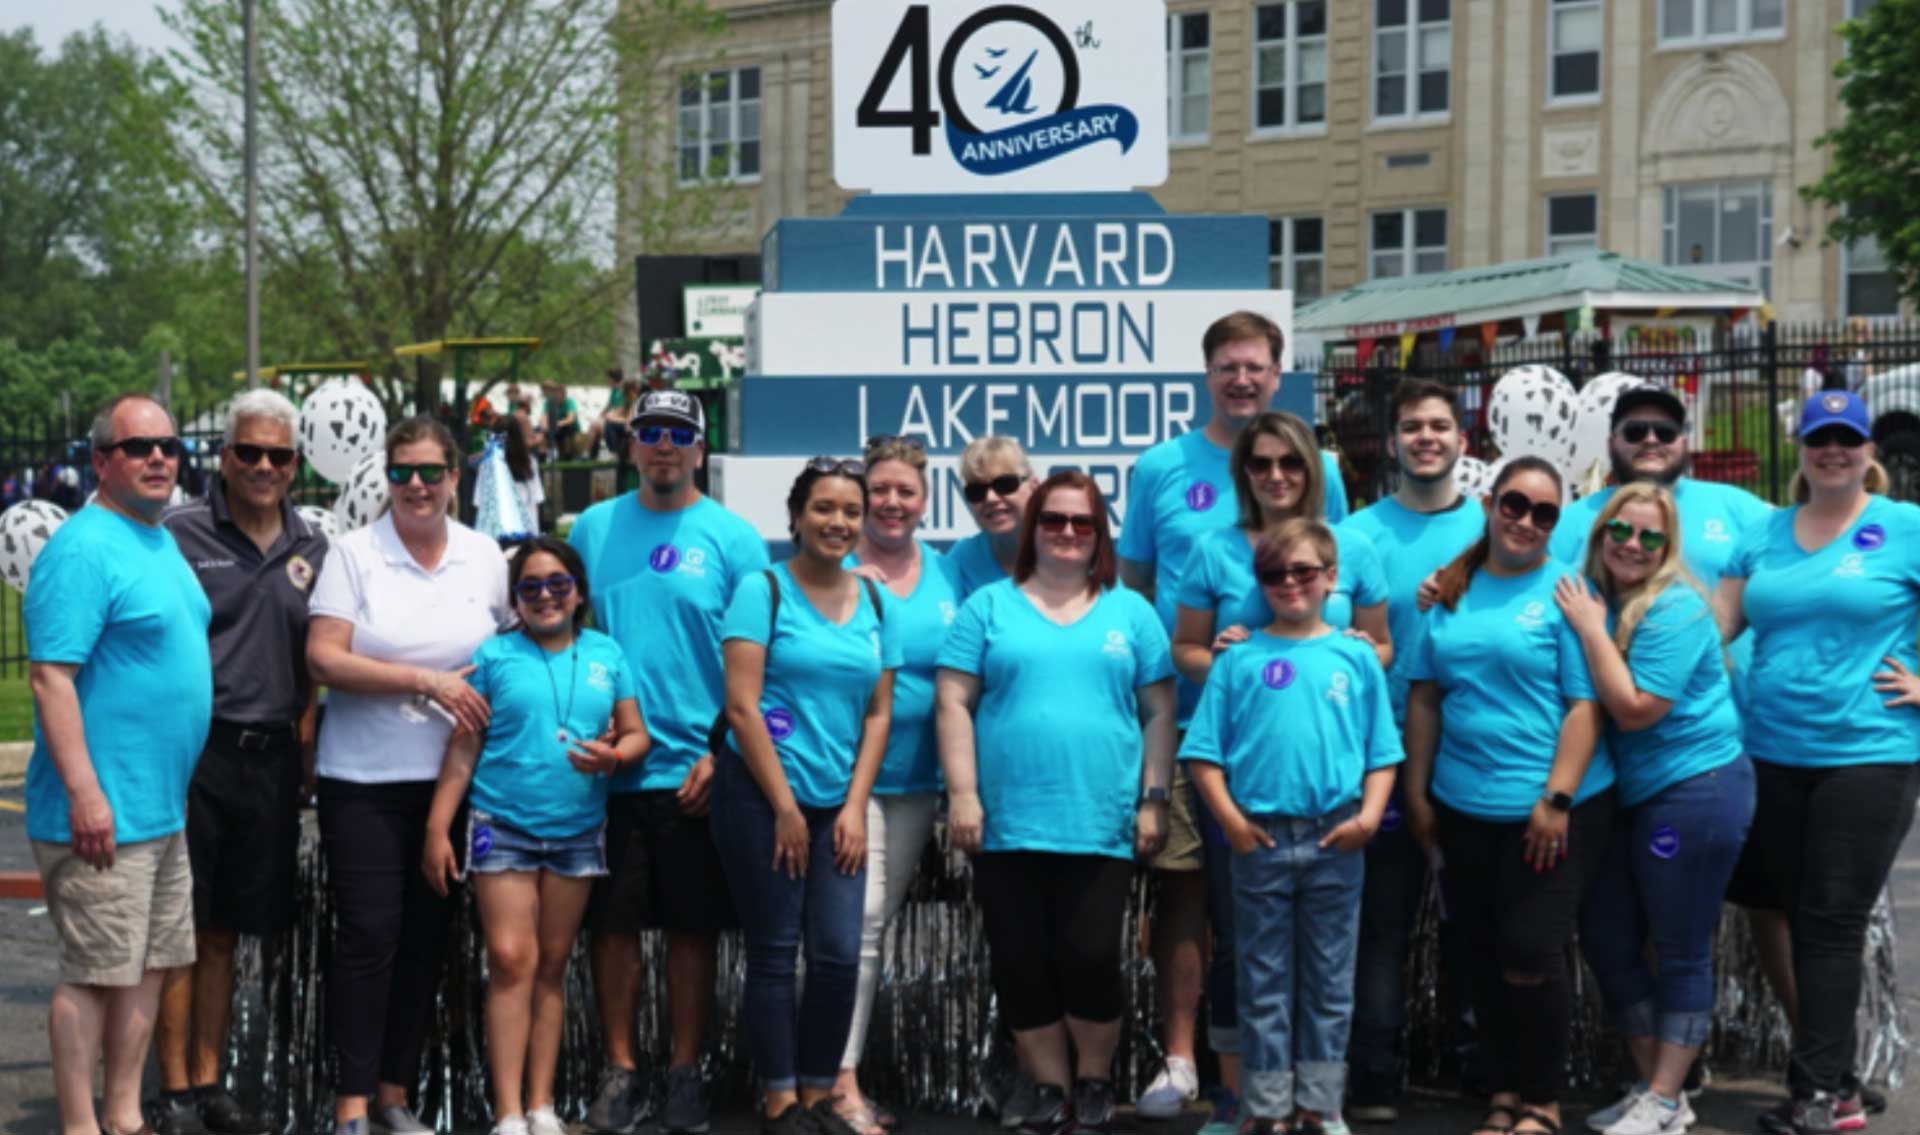 The State Bank Group sponsors Harvard Milk Days